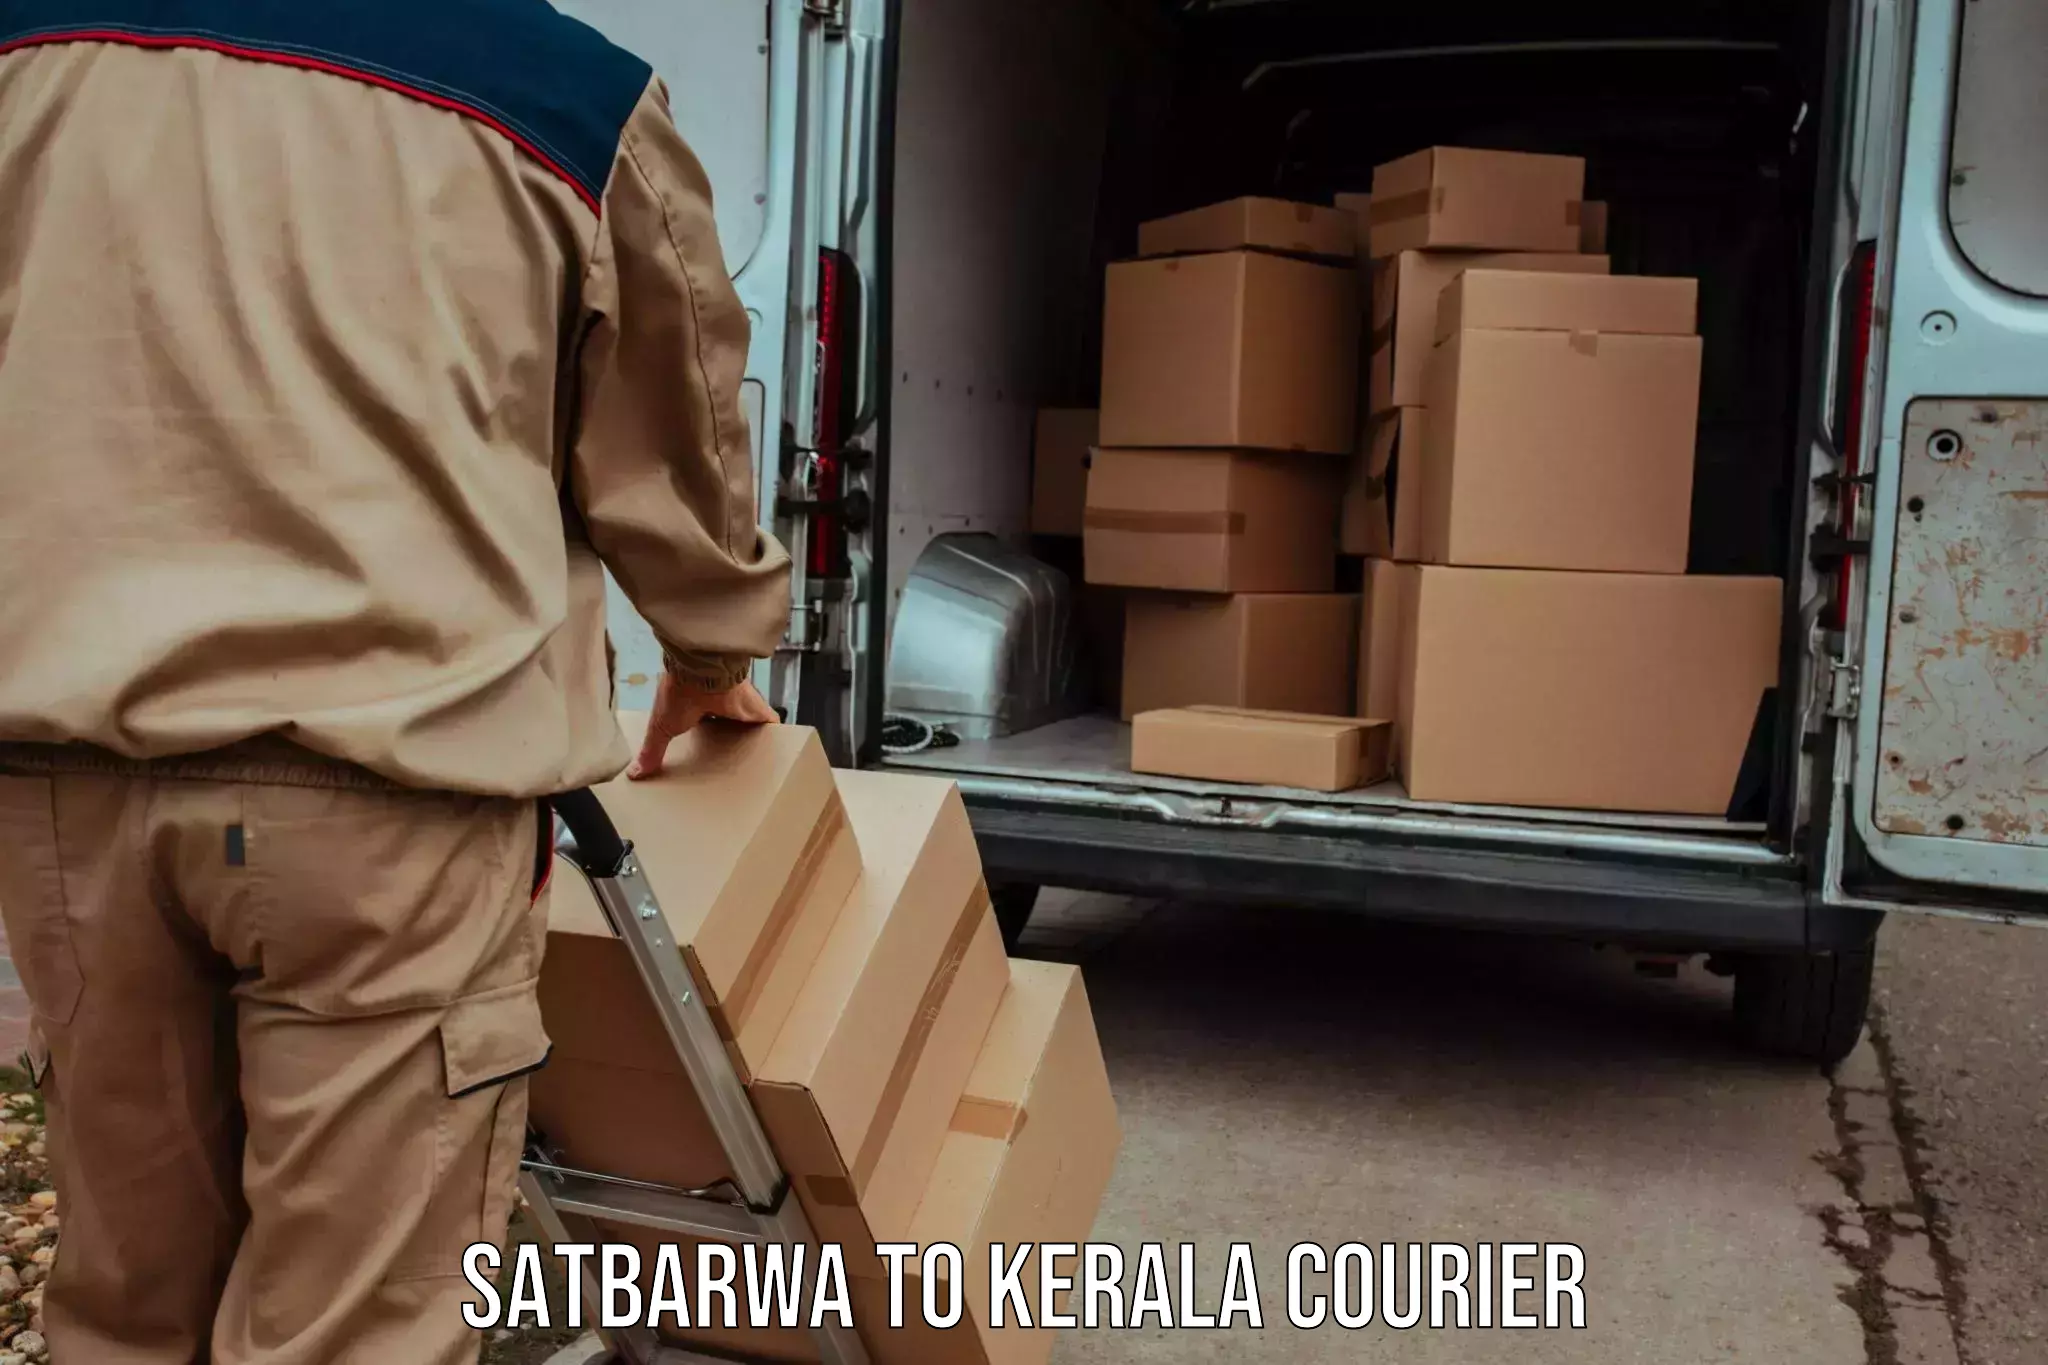 Express delivery capabilities Satbarwa to Kerala